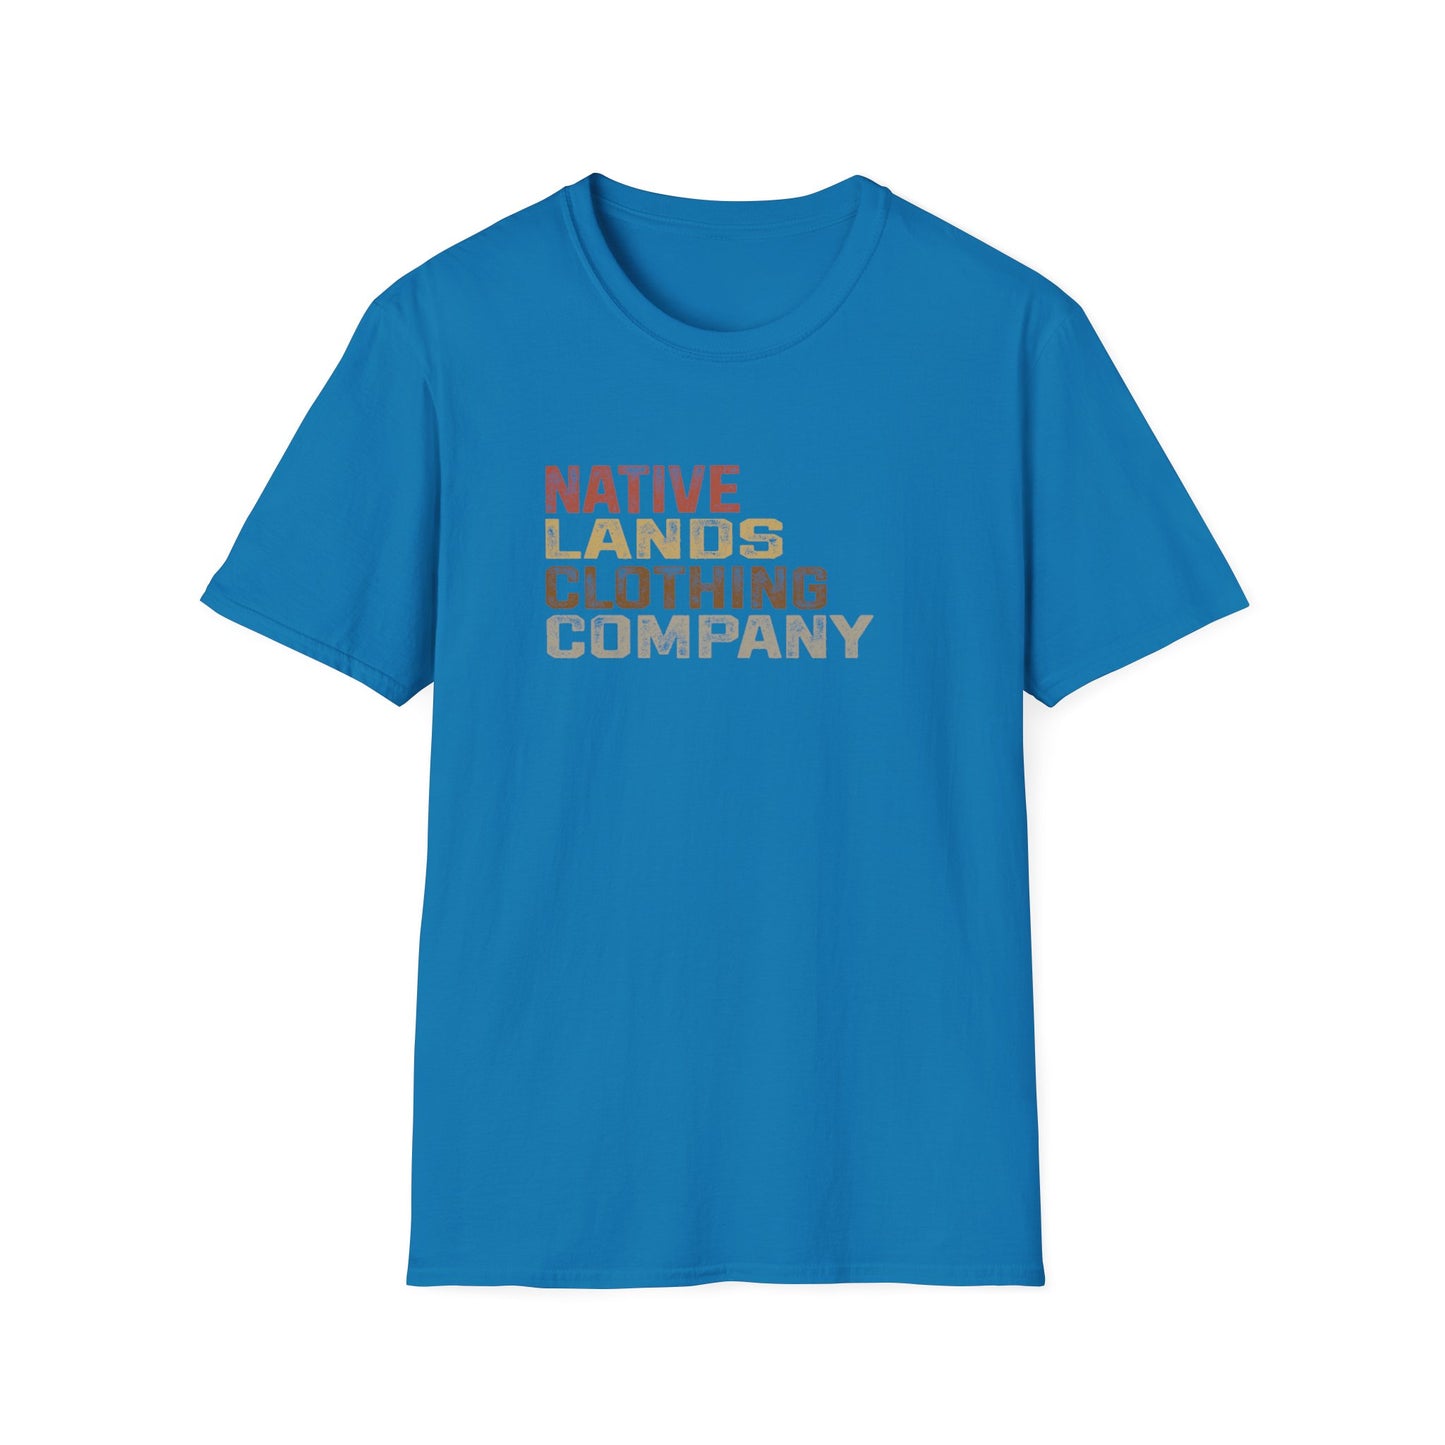 Native Lands Clothing Company Earth Shirt Kotoia Native American